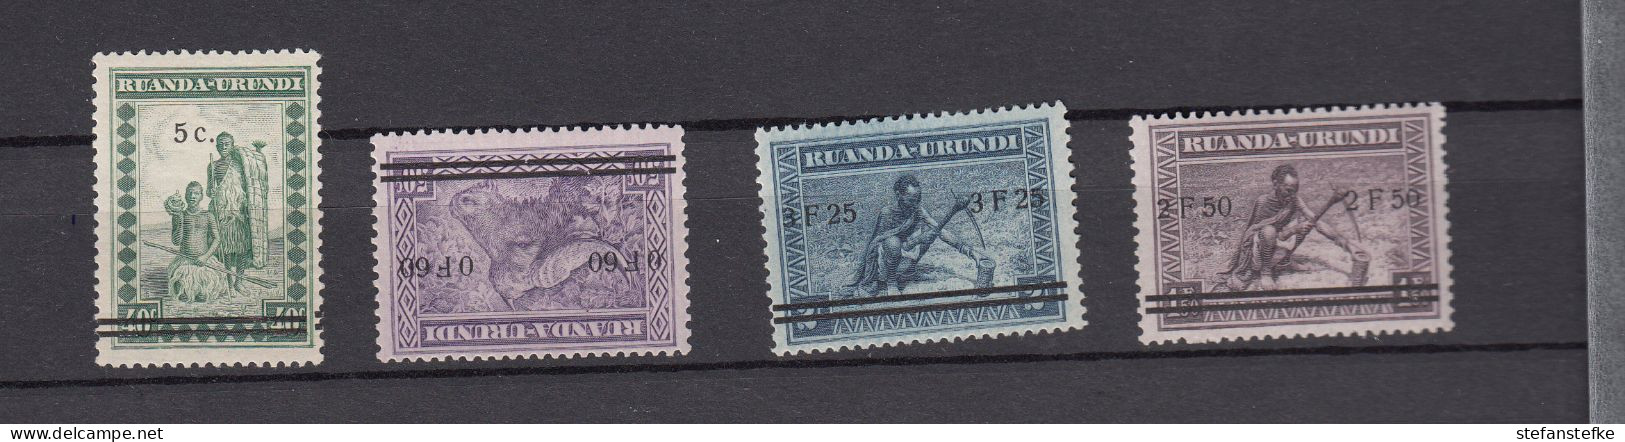 Ruanda - Urundi  Ocb Nr:  114 - 117  * MH (zie Scan)  115 ** MNH - Unused Stamps